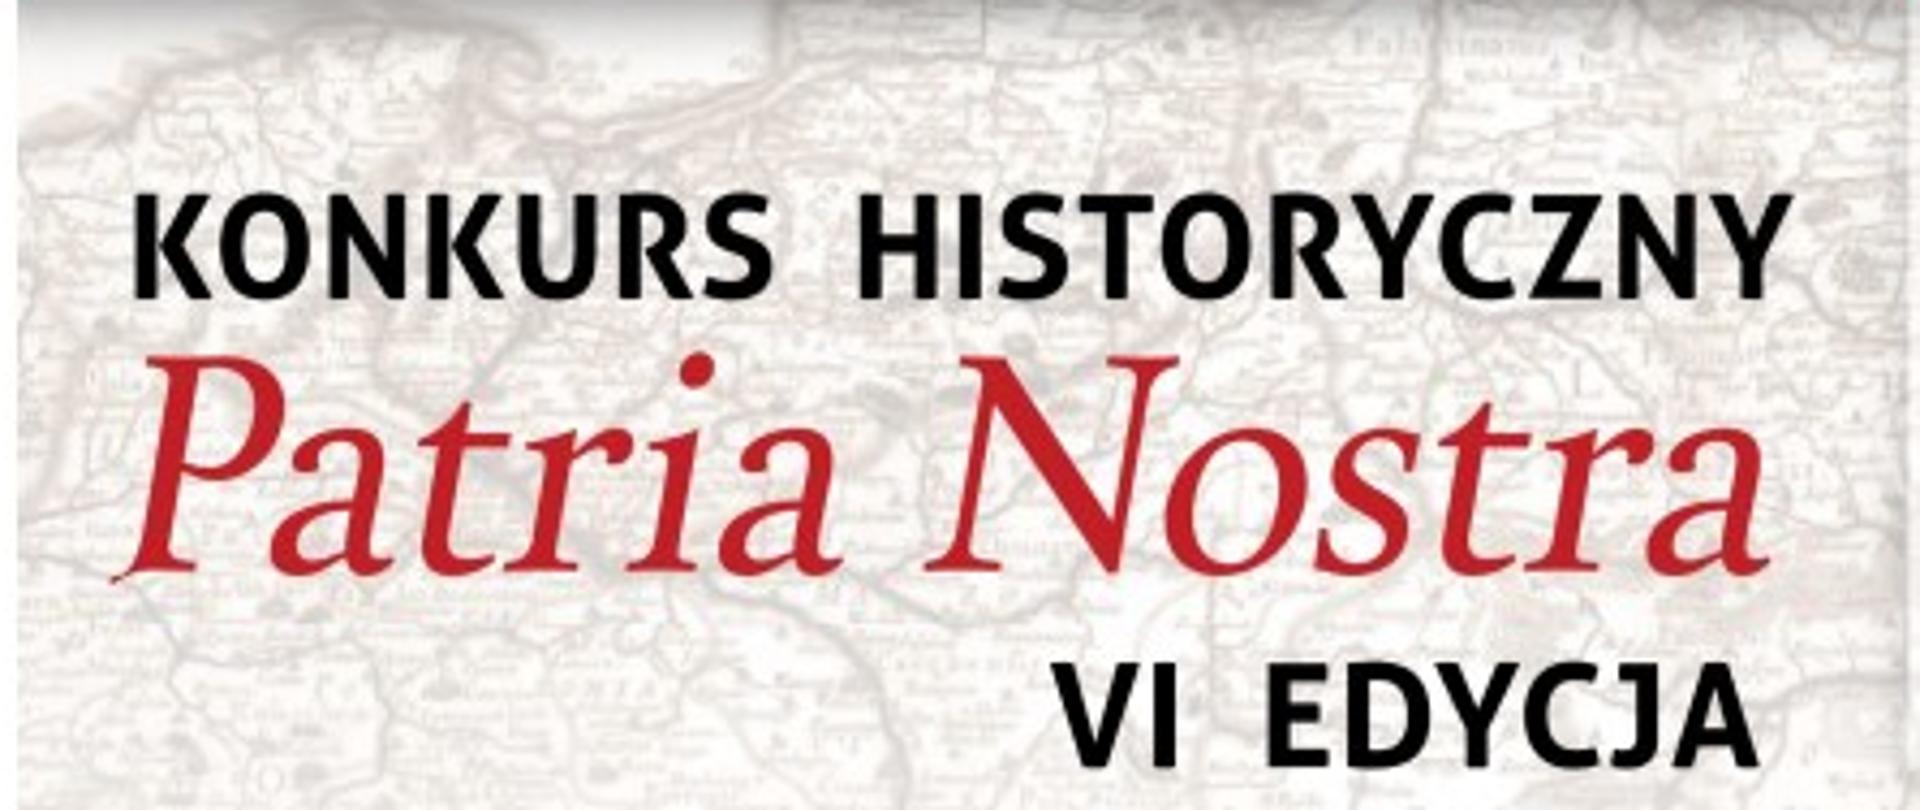 Konkurs Historyczny Patria Nostra